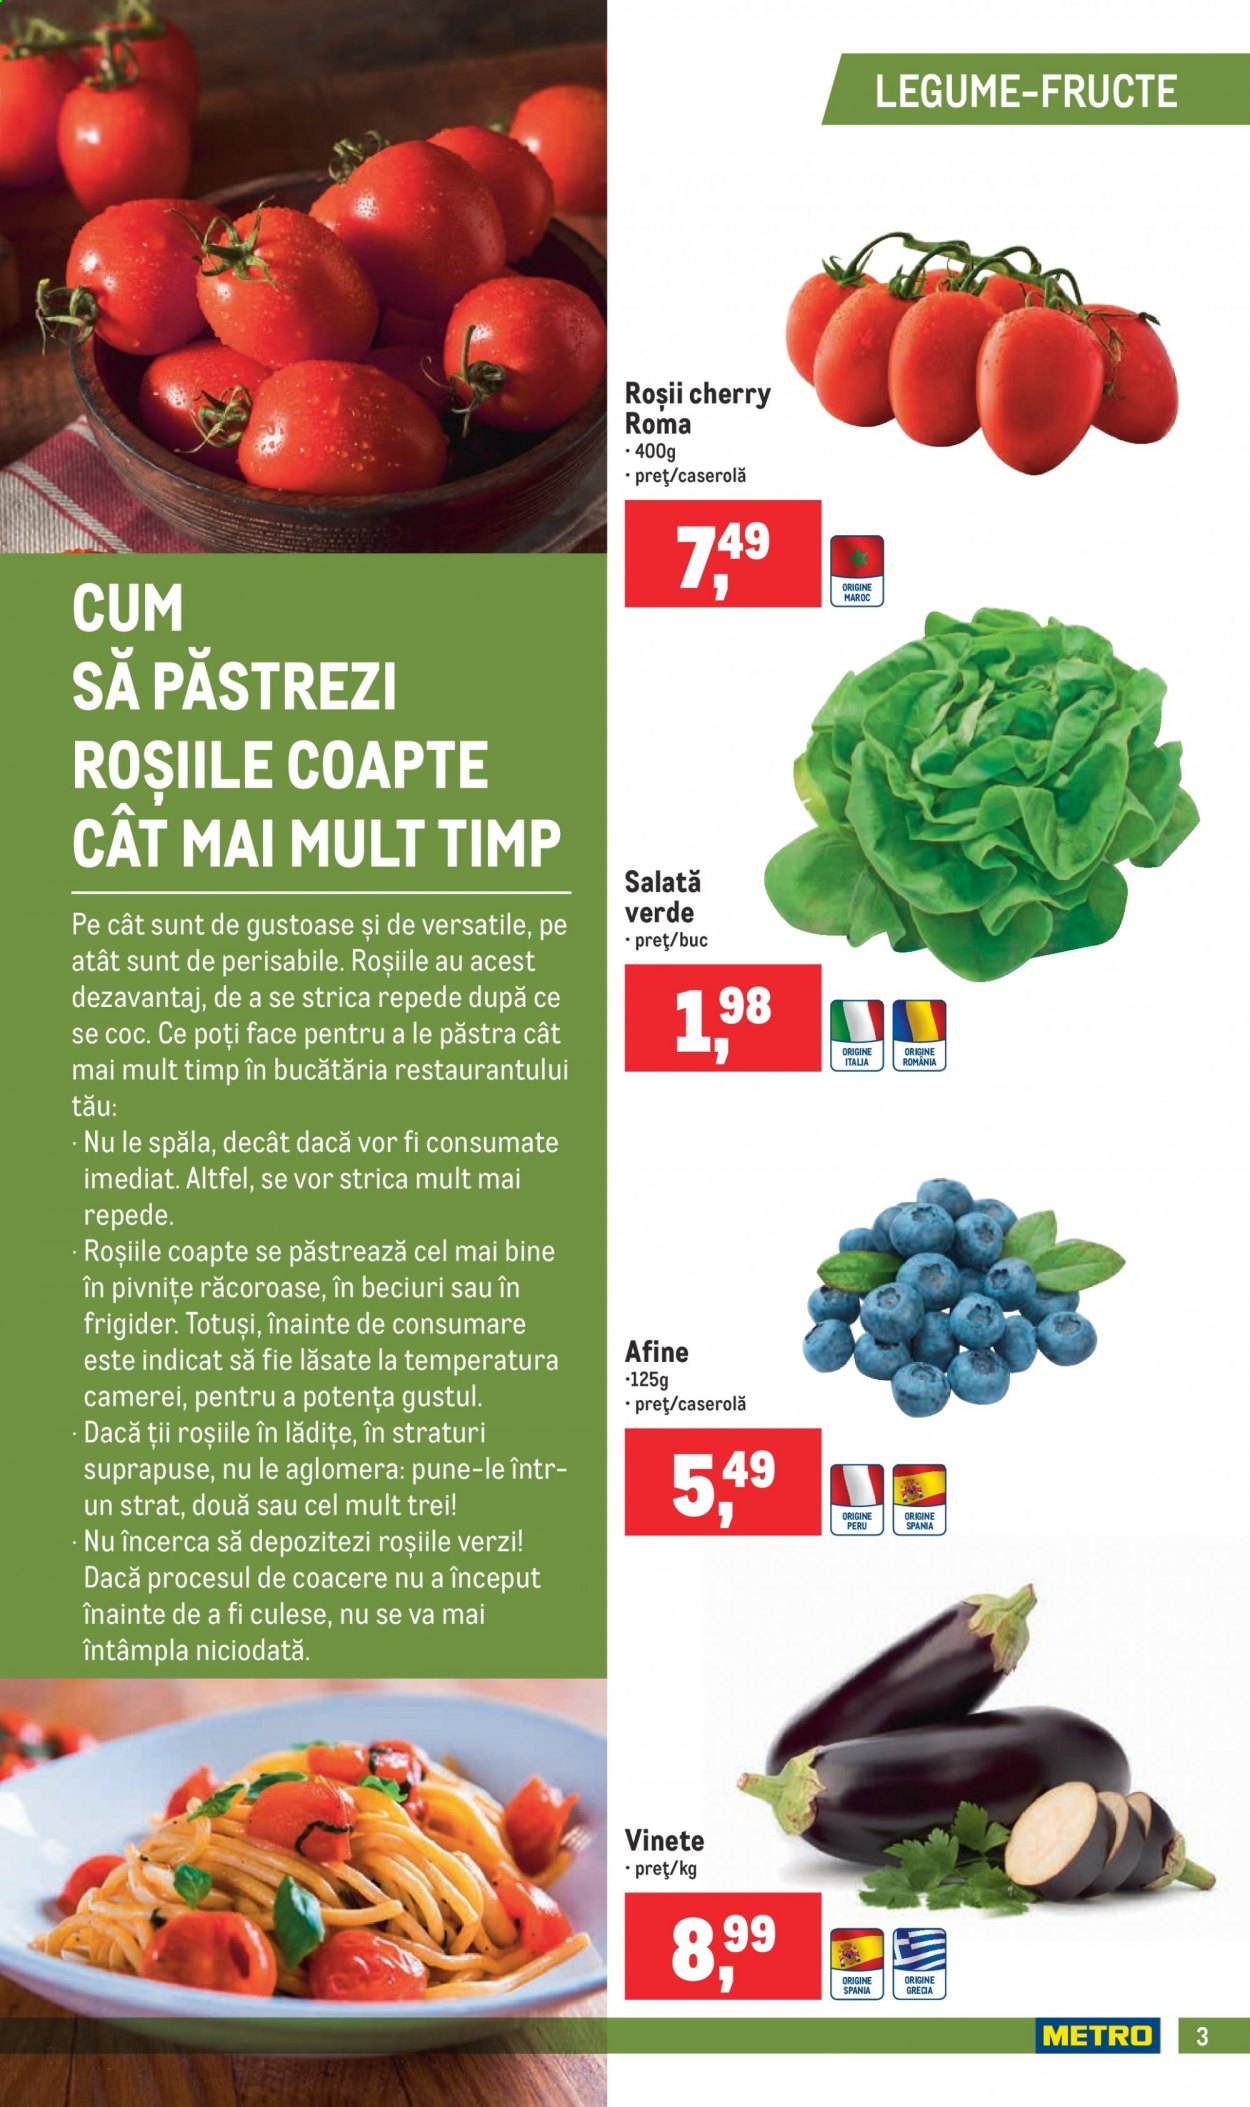 thumbnail - Cataloage Metro - 13.01.2021 - 19.01.2021 - Produse în vânzare - salată, rosii cherry, vinete, frigider. Pagina 3.